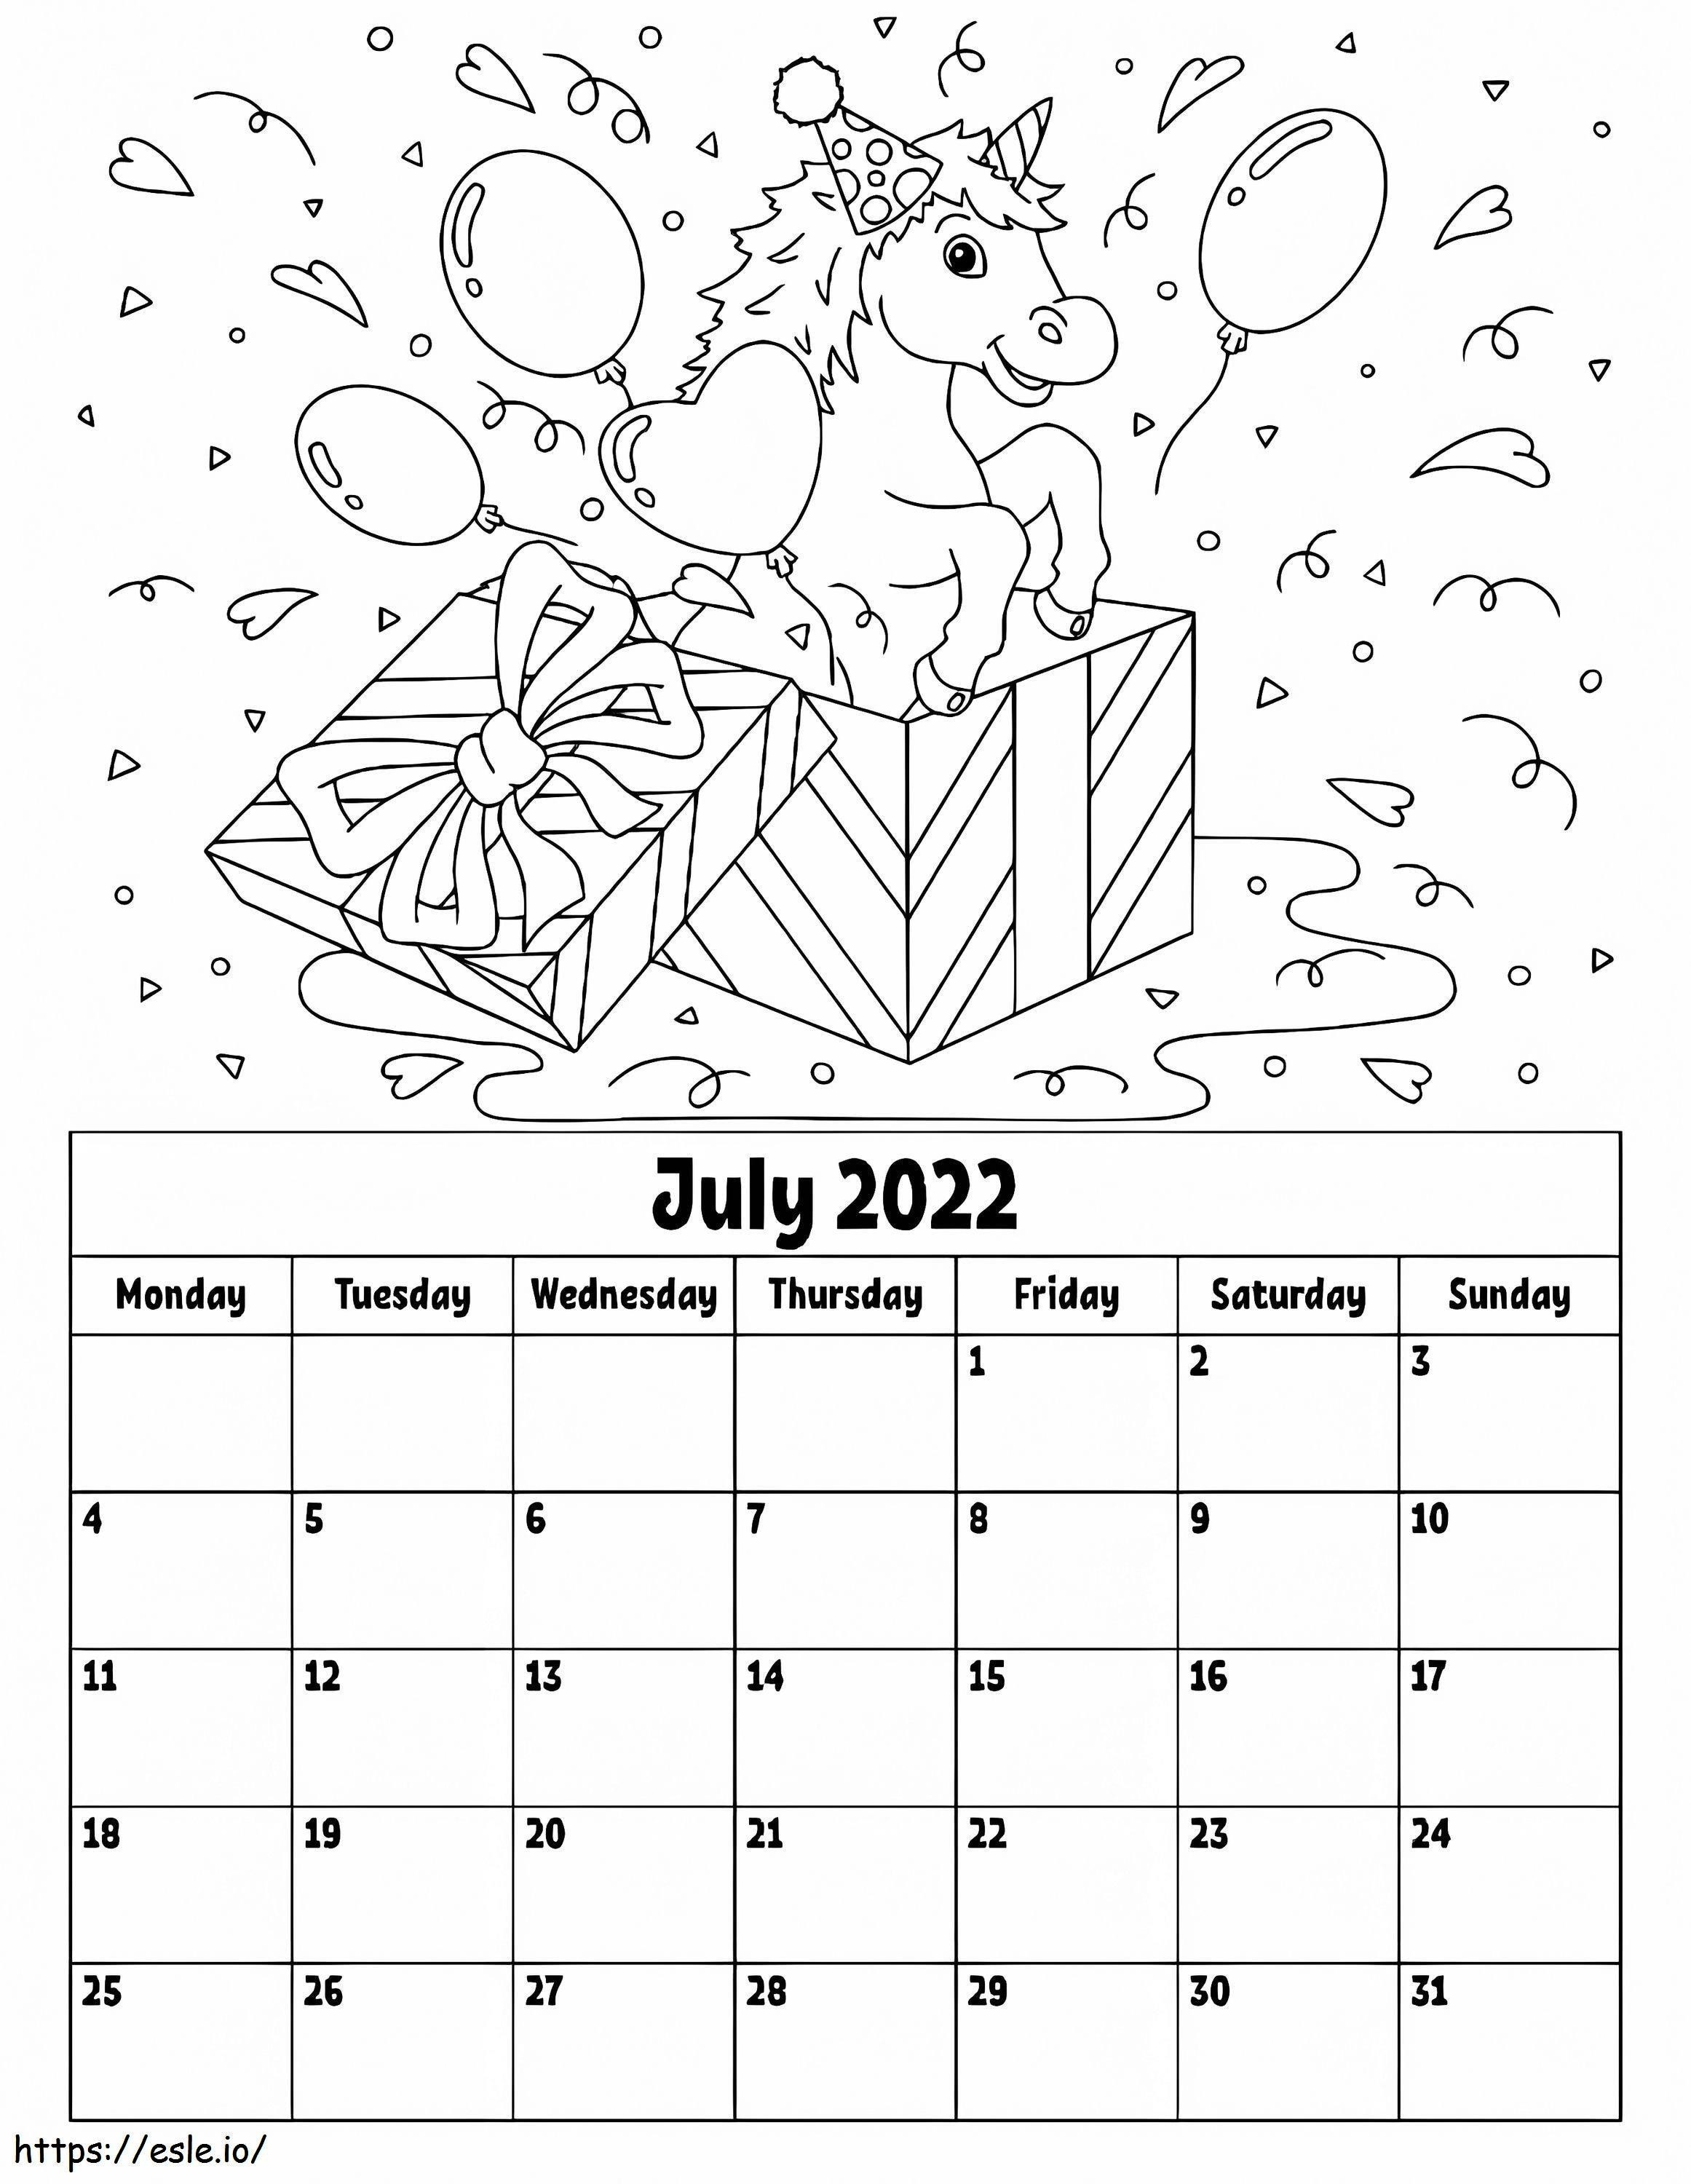 Calendario julio 2022 para colorear